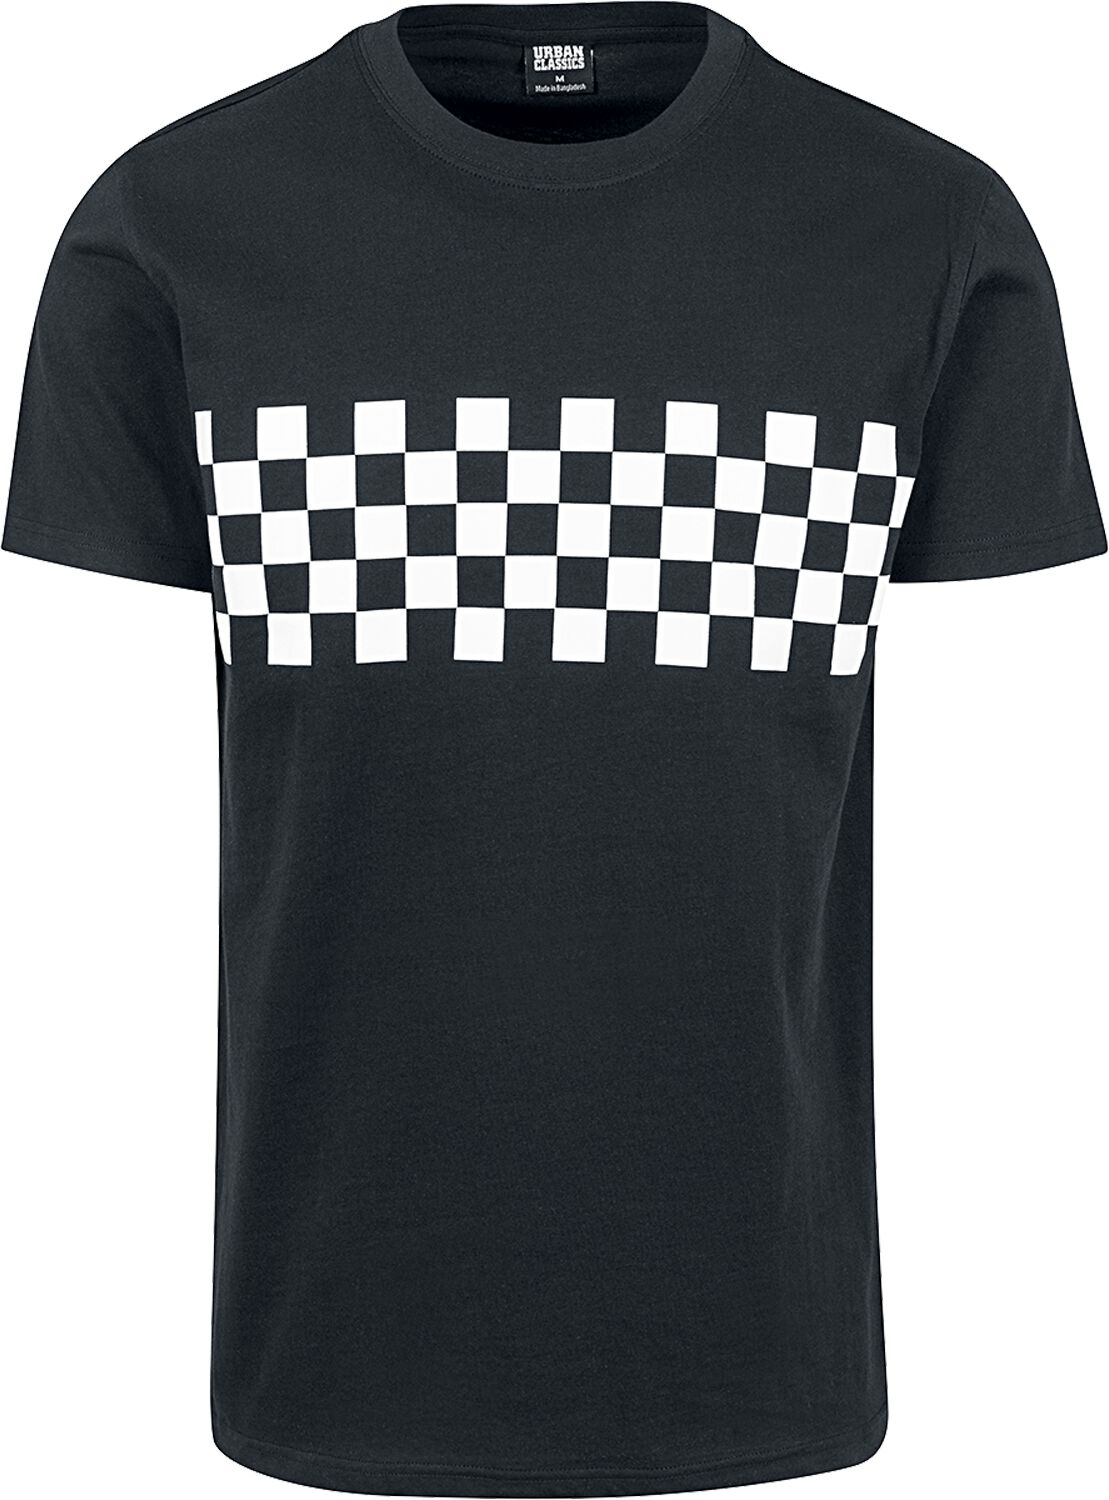 Urban Classics Check Panel Tee T-Shirt schwarz in 4XL